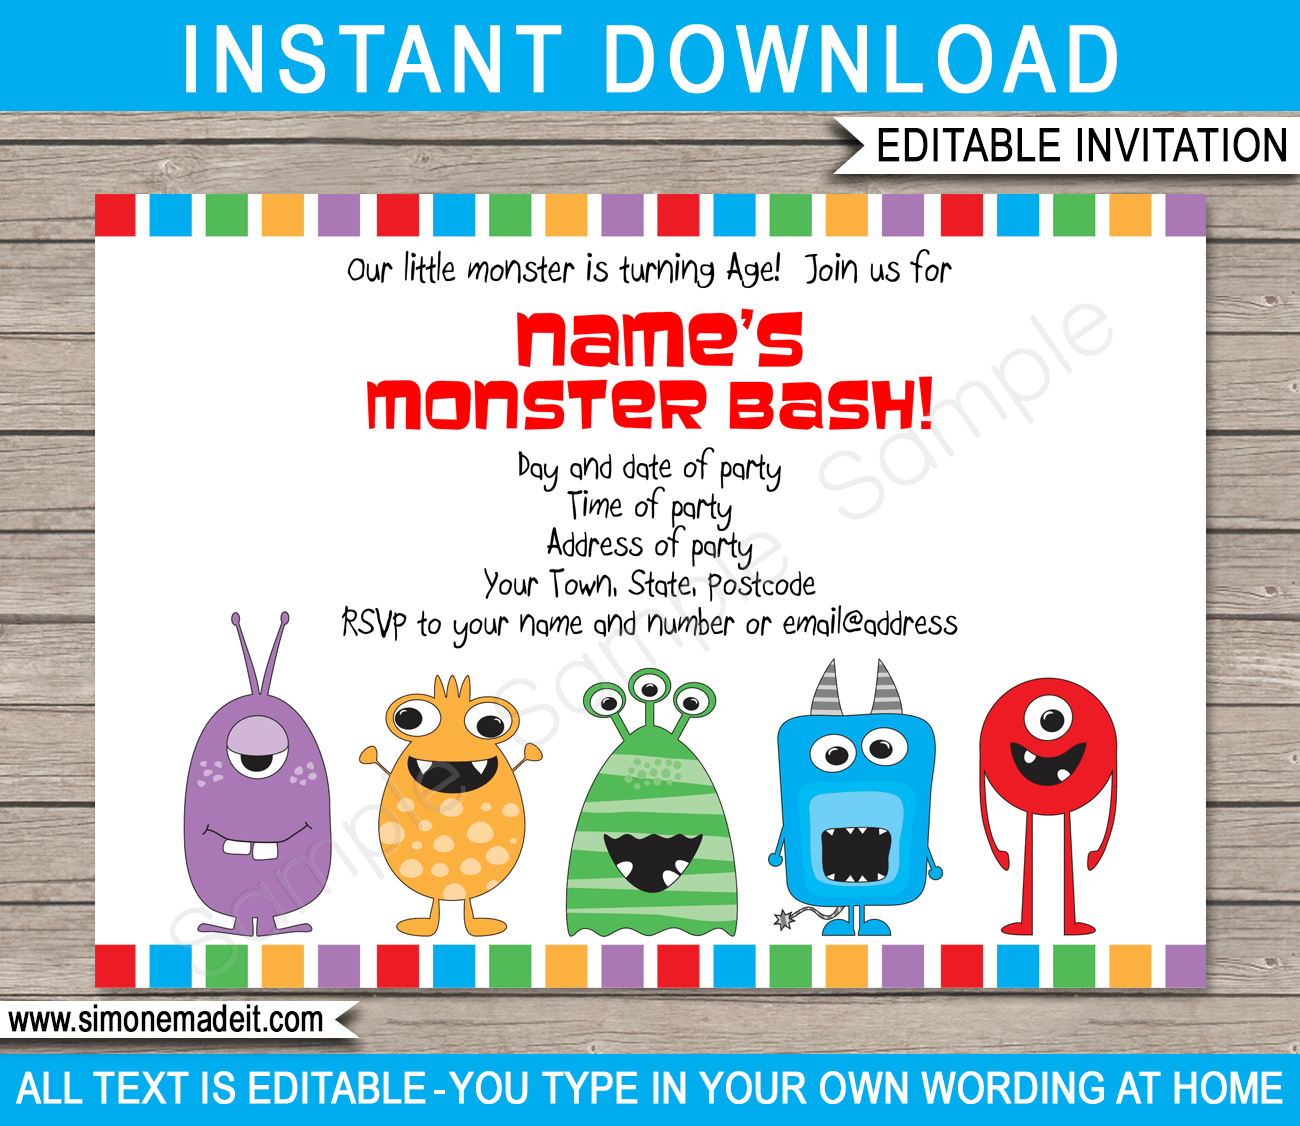 Printable Monster Birthday Party Invitations Template | DIY Editable Text | INSTANT DOWNLOAD $7.50 via SIMONEmadeit.com